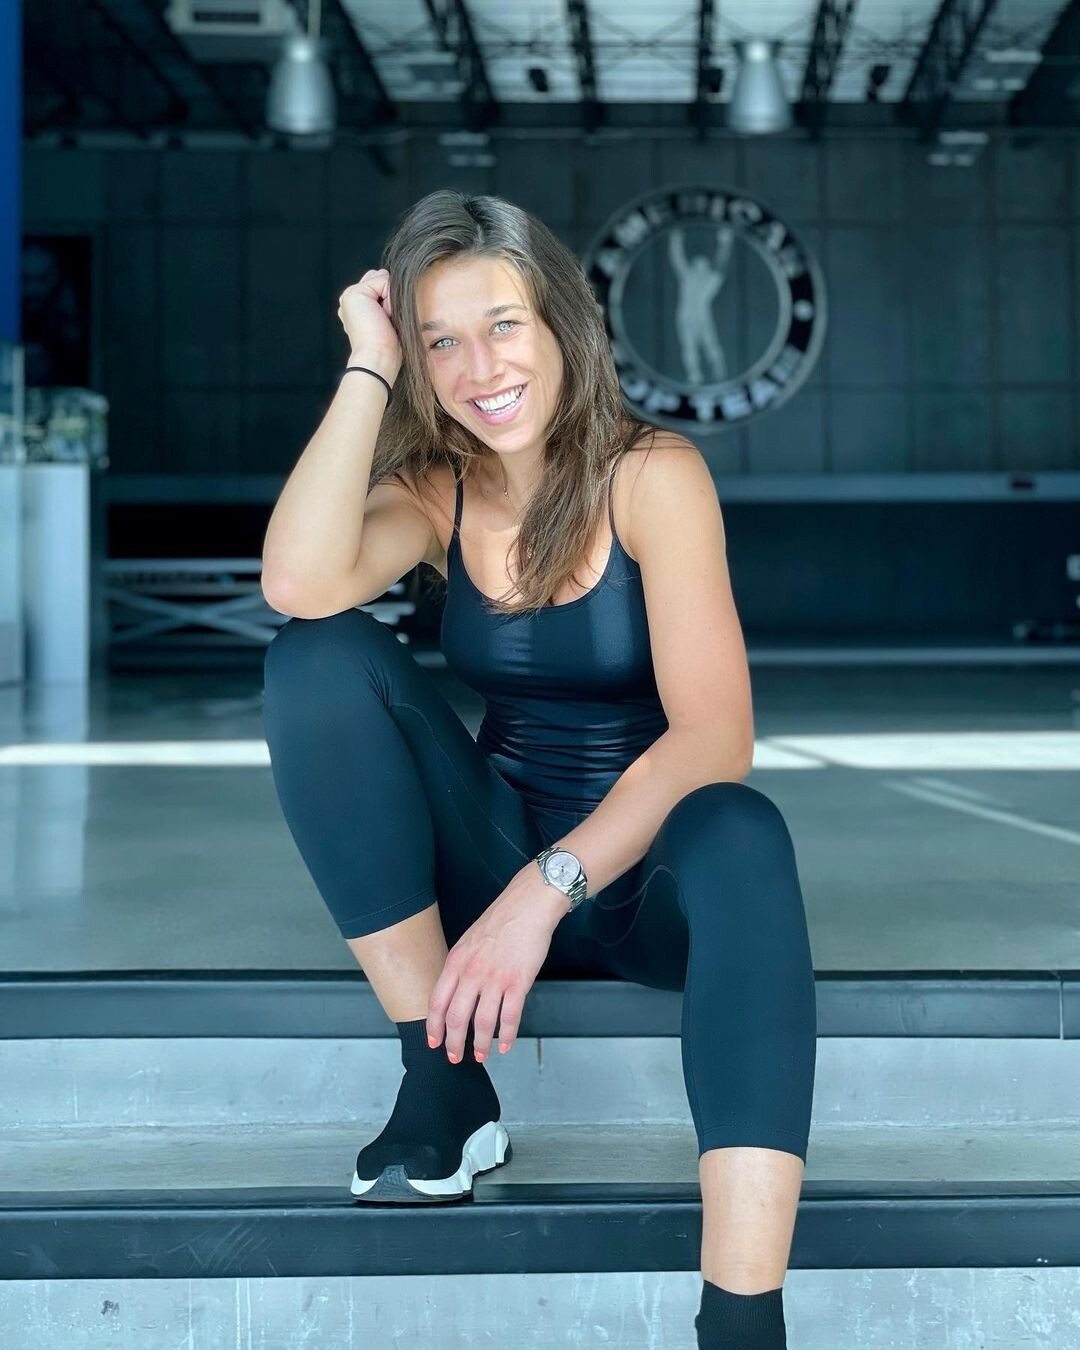 Joanna Jedrzejczyk at the American Top Team gym in Florida. Photo: Instagram